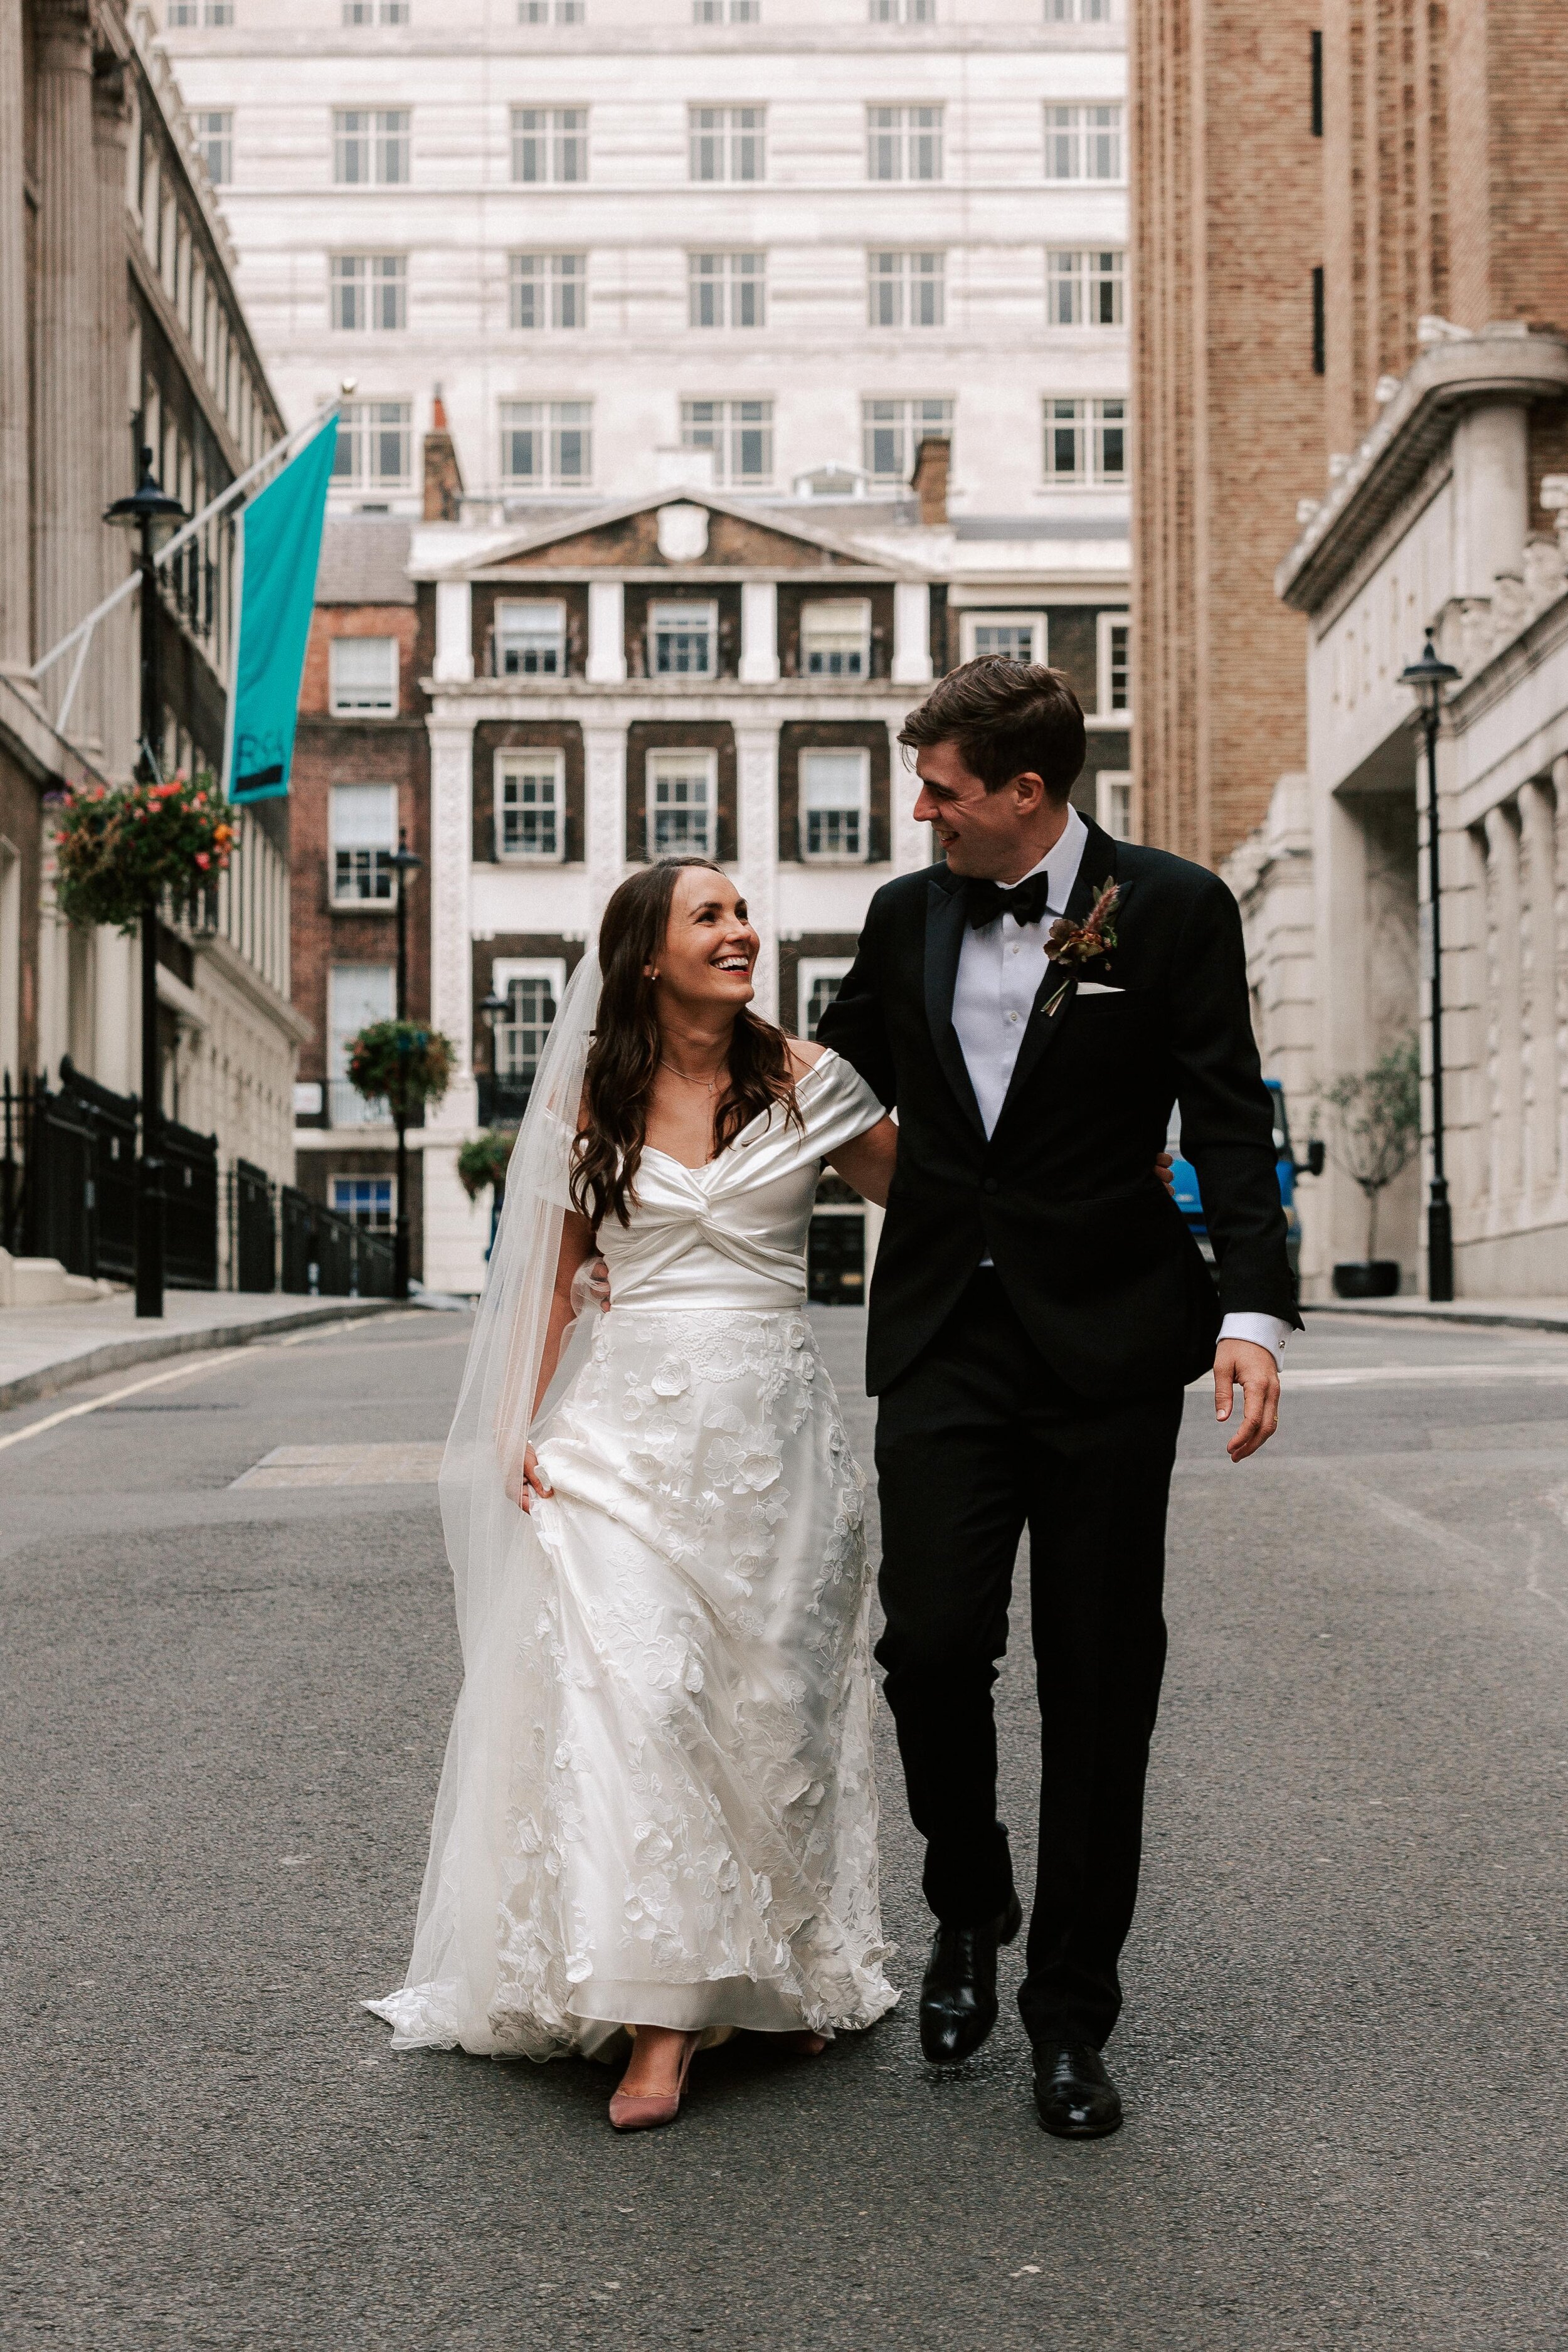 Beautiful bride Rosey wore a wedding dress by Halfpenny London